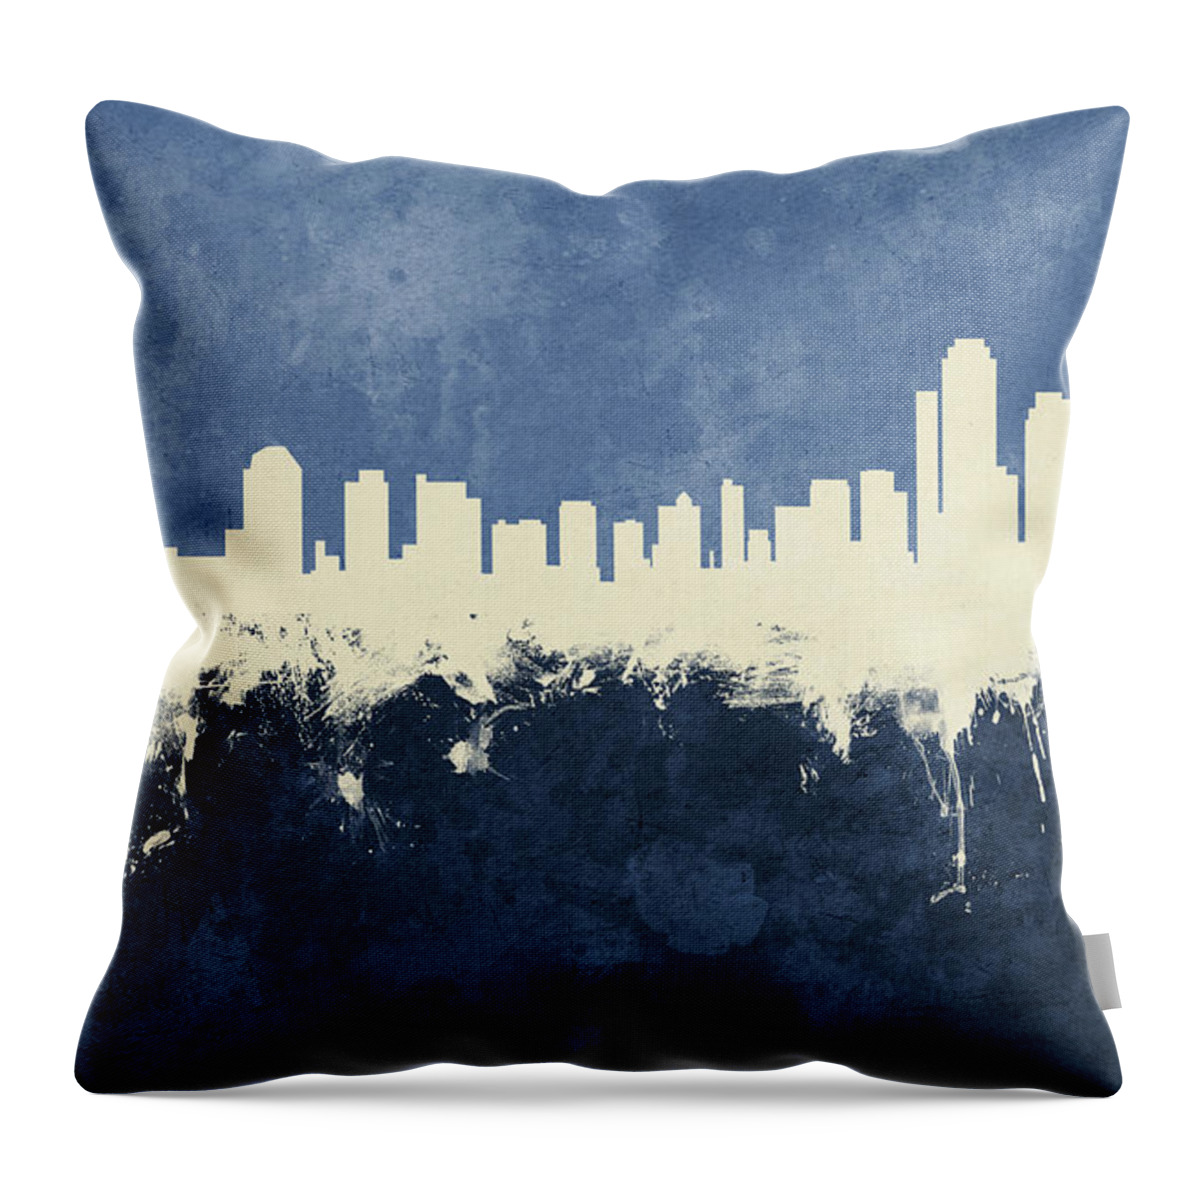 Wilmington Throw Pillow featuring the digital art Wilmington Delaware Skyline #14 by Michael Tompsett